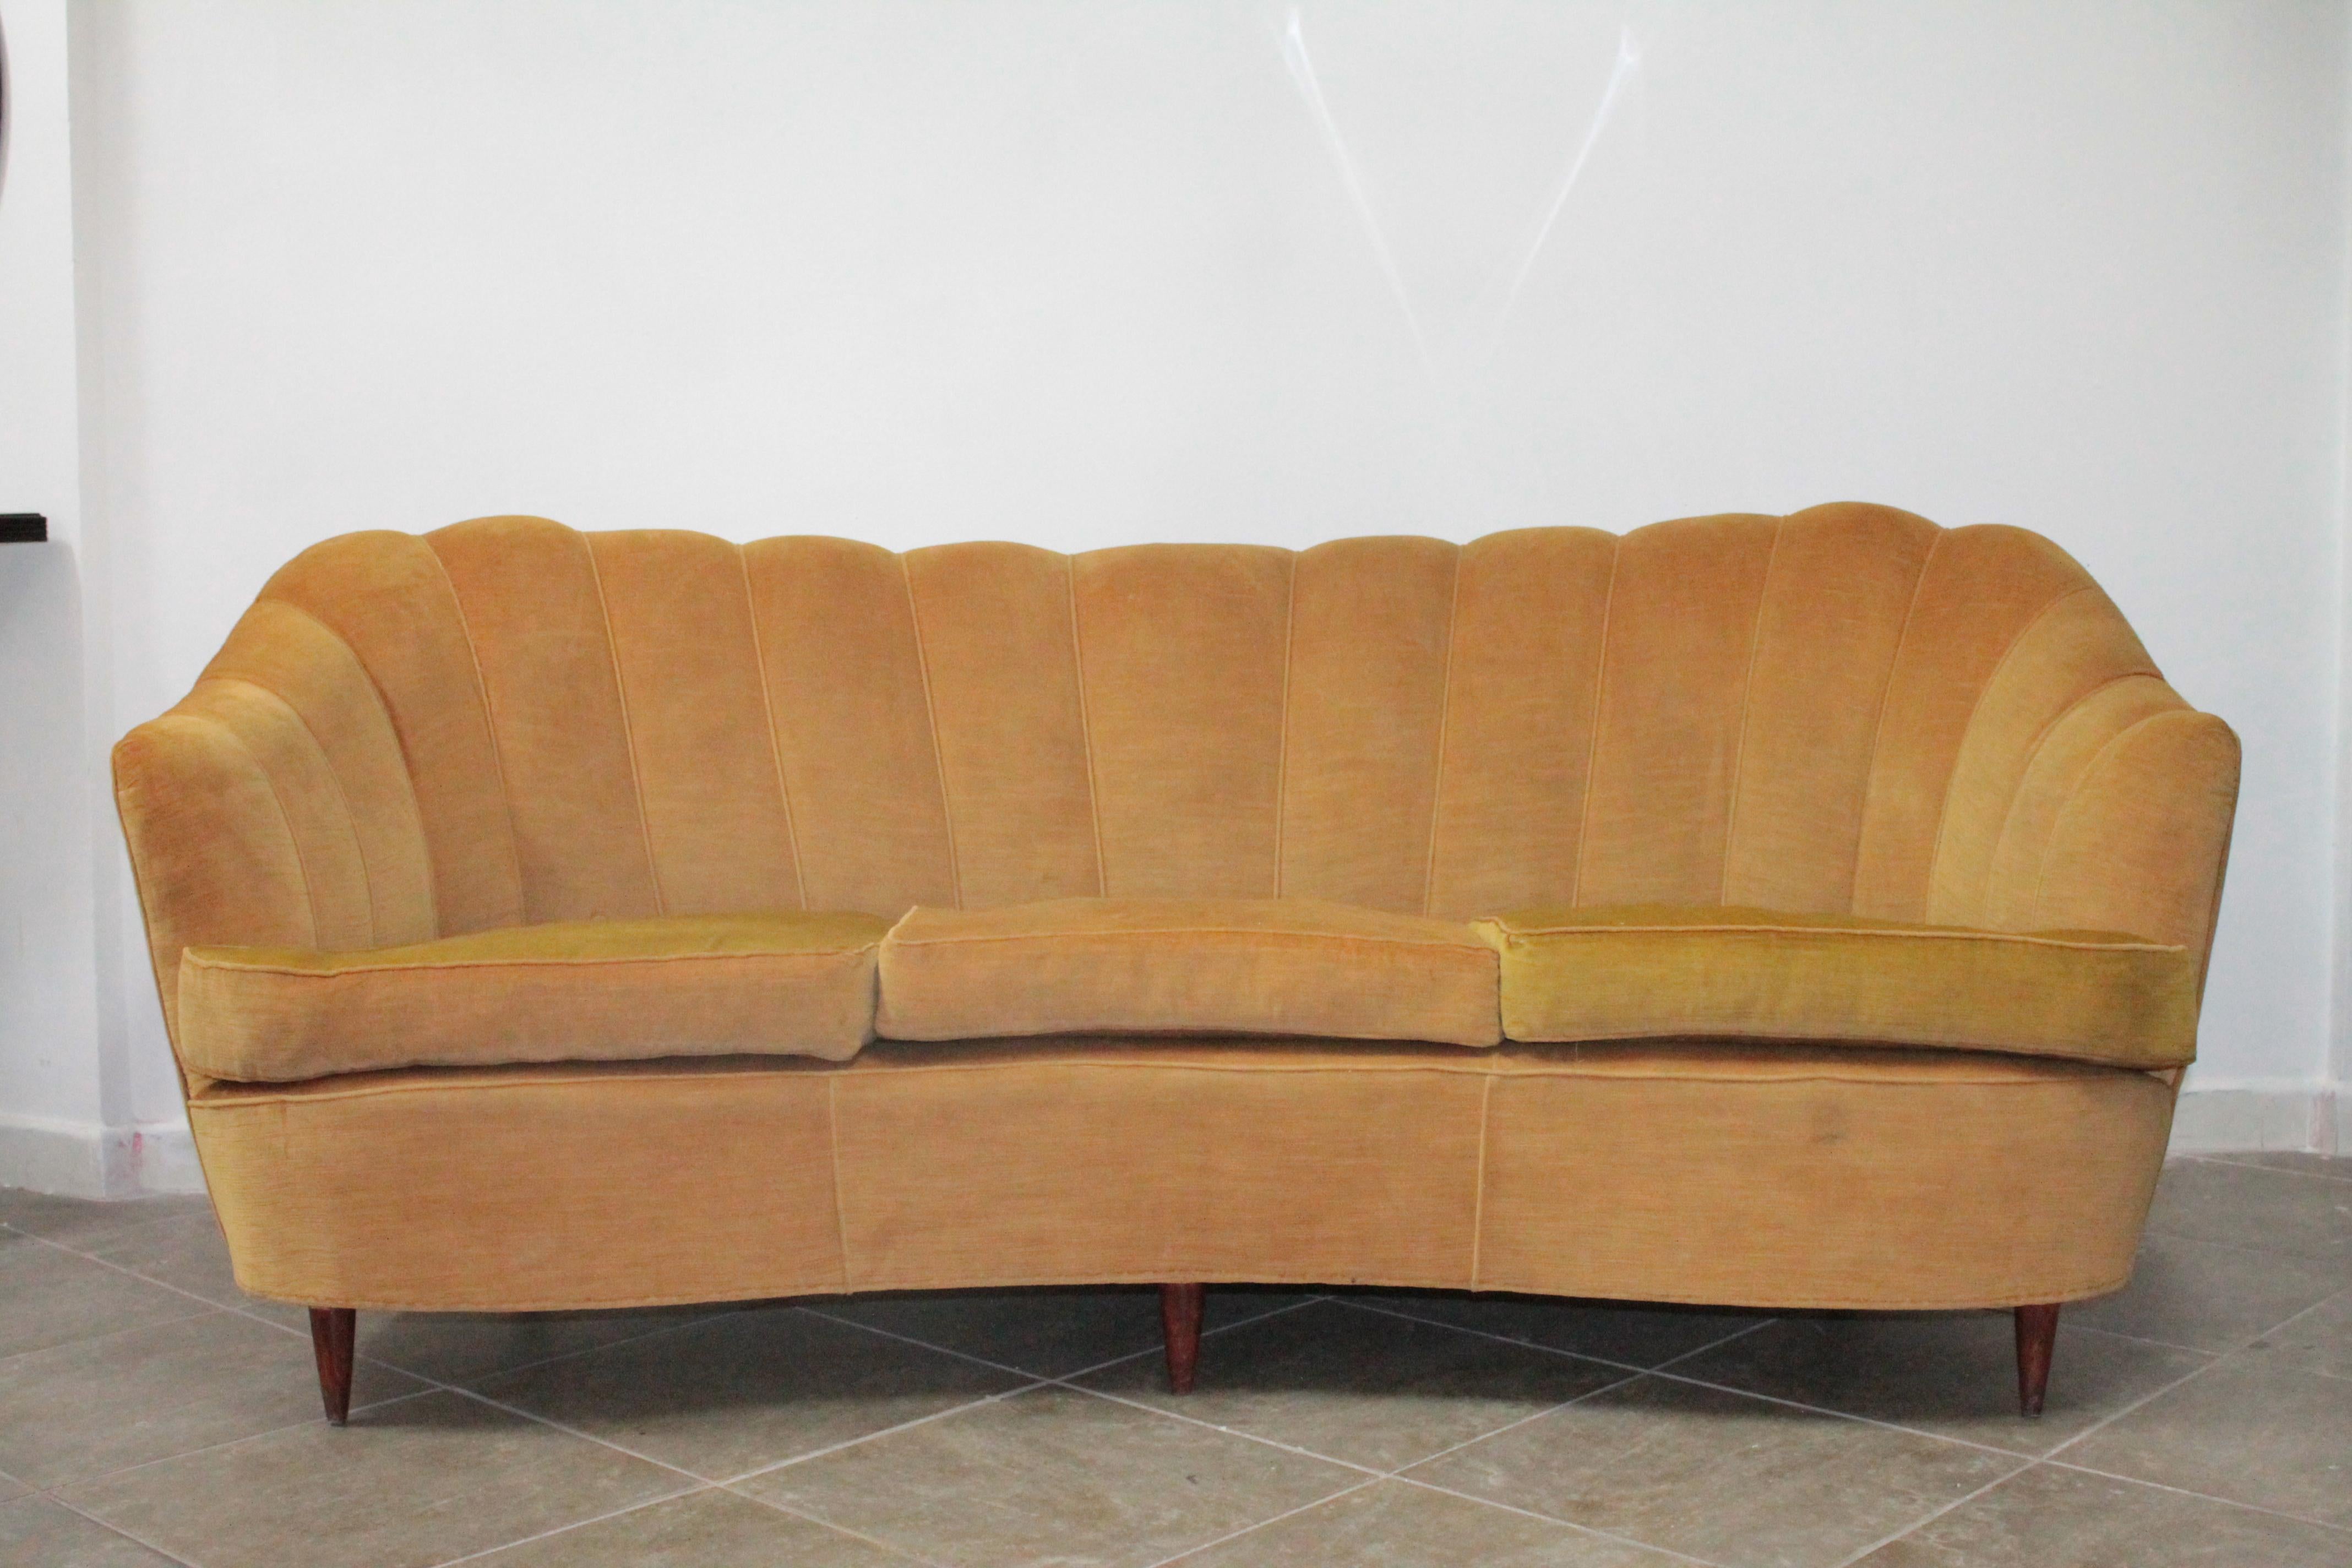 Wonderful Italian curved sofa attributed to Casa e Giardino design Gio Ponti.
Good good original condition, wood legs and original velvet.
